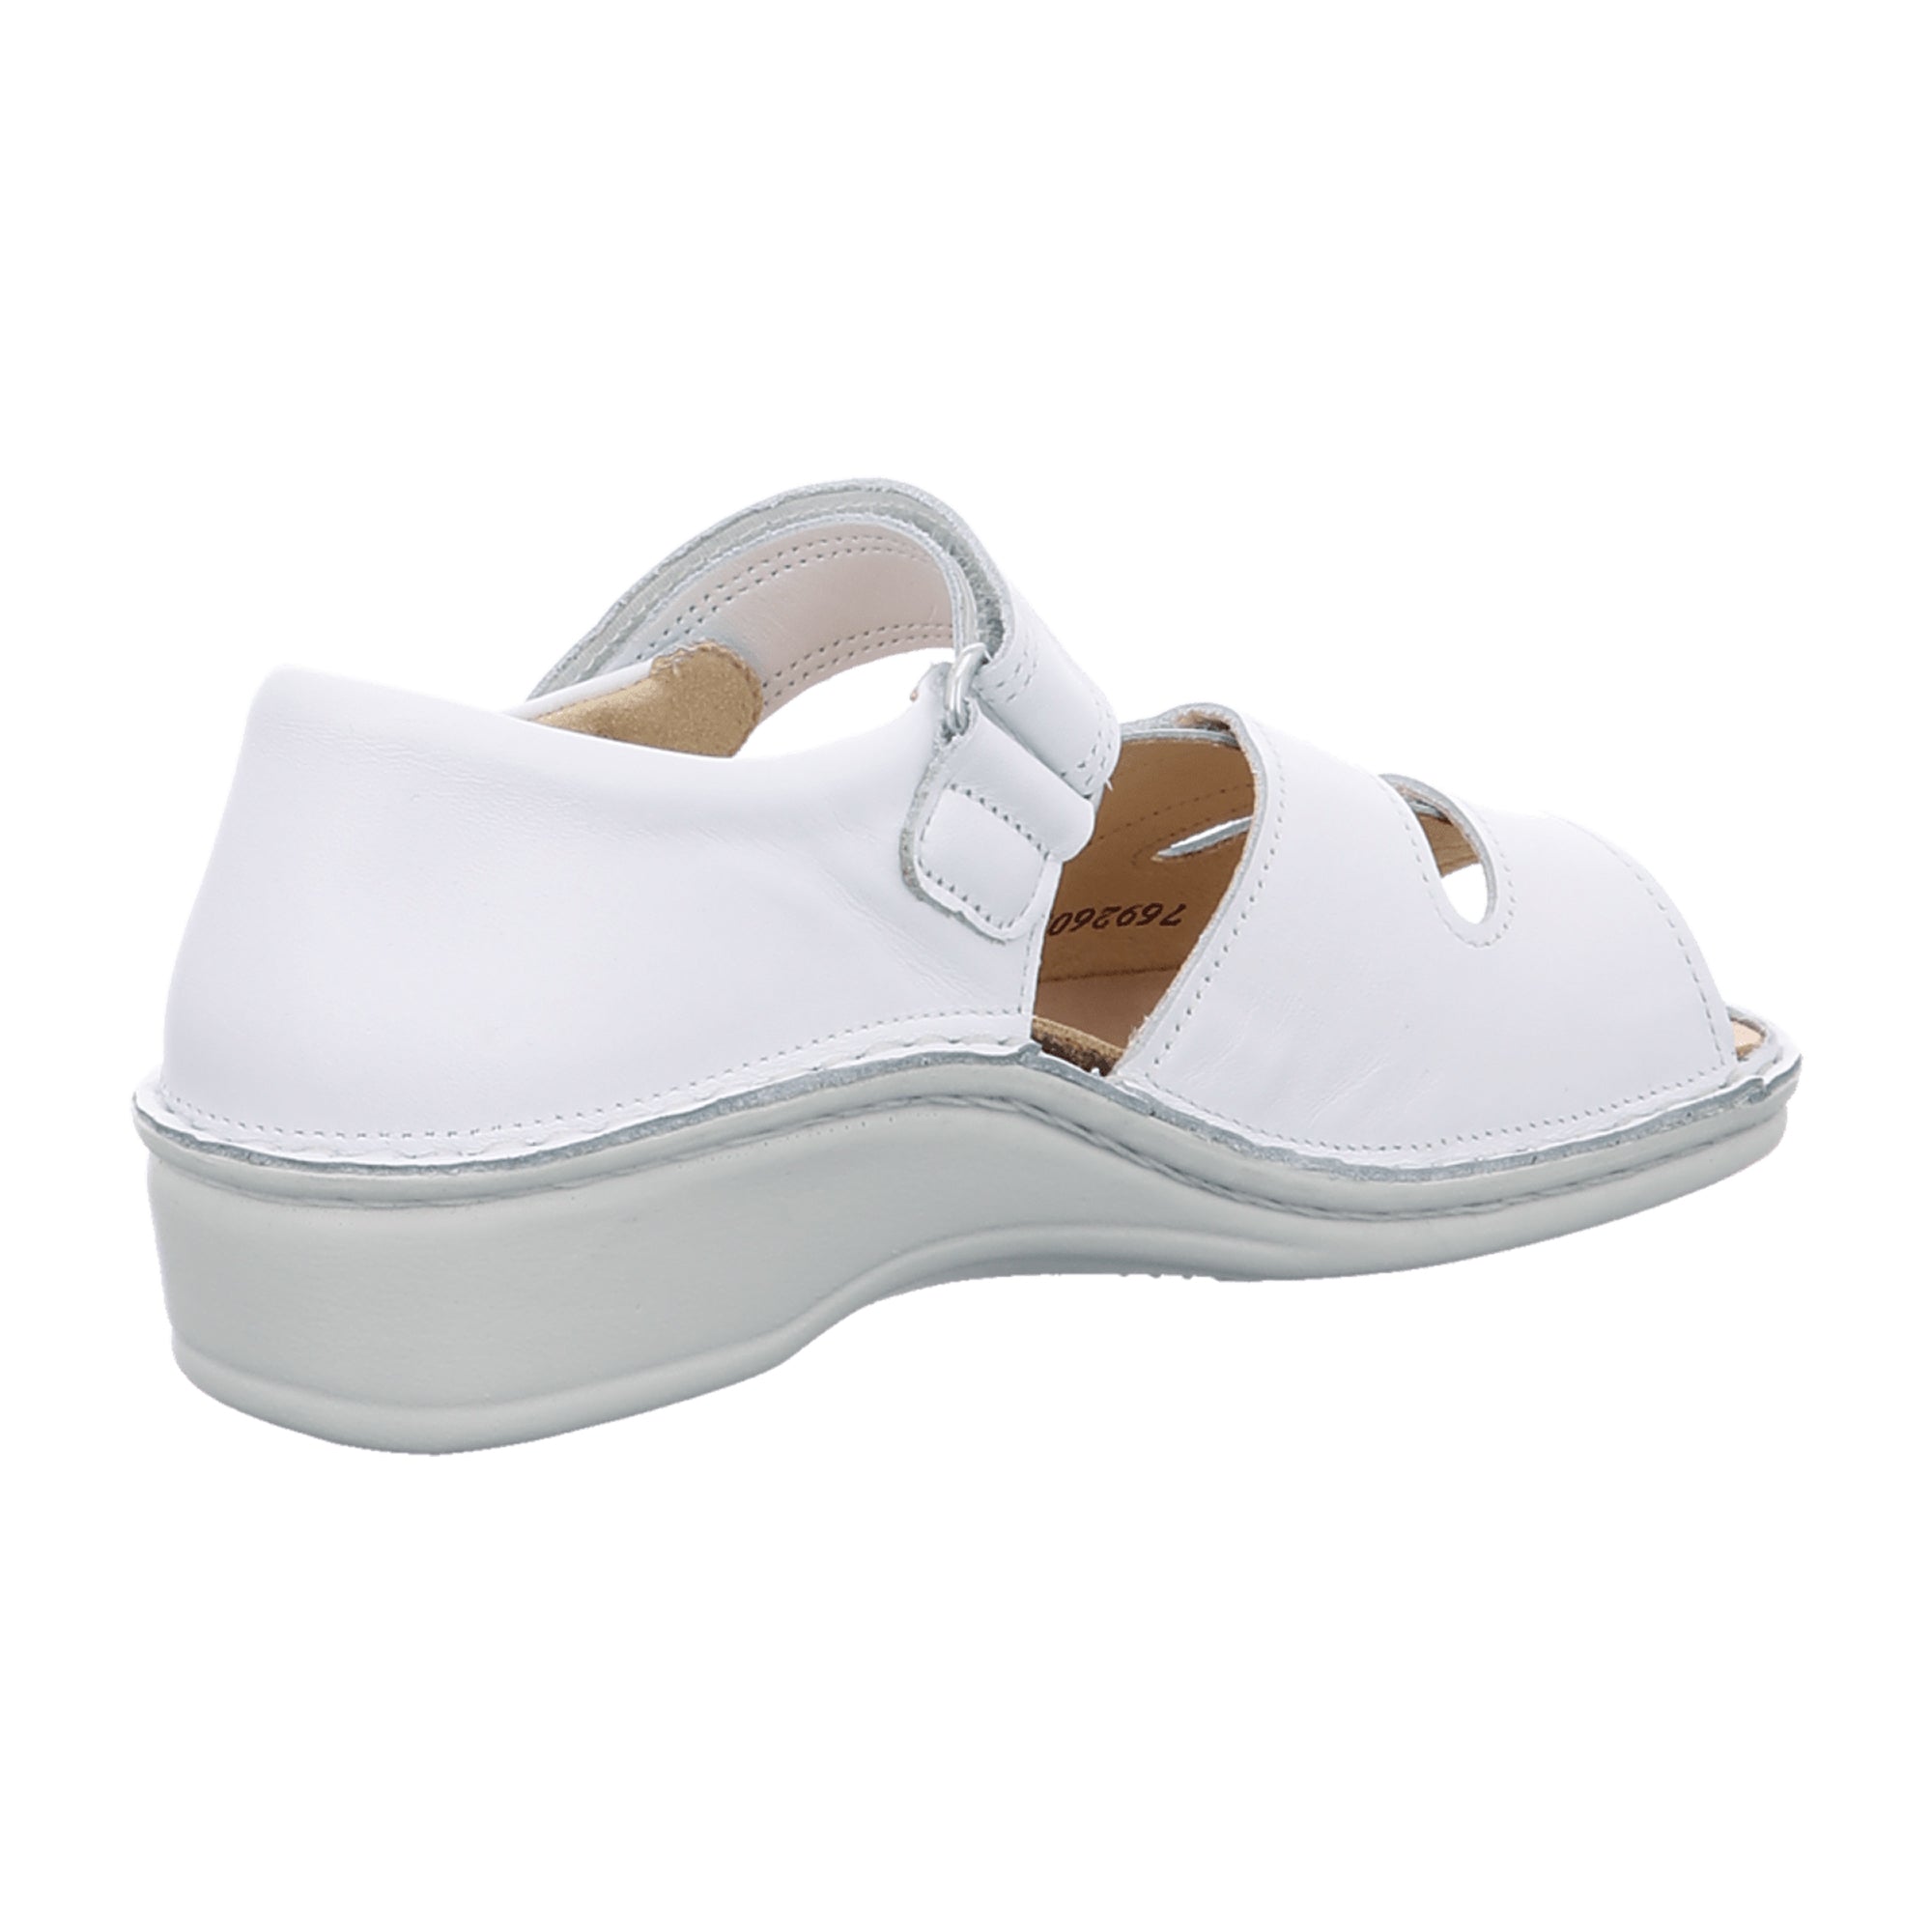 Finn Comfort Usedom White Sandals for Women - Stylish & Durable